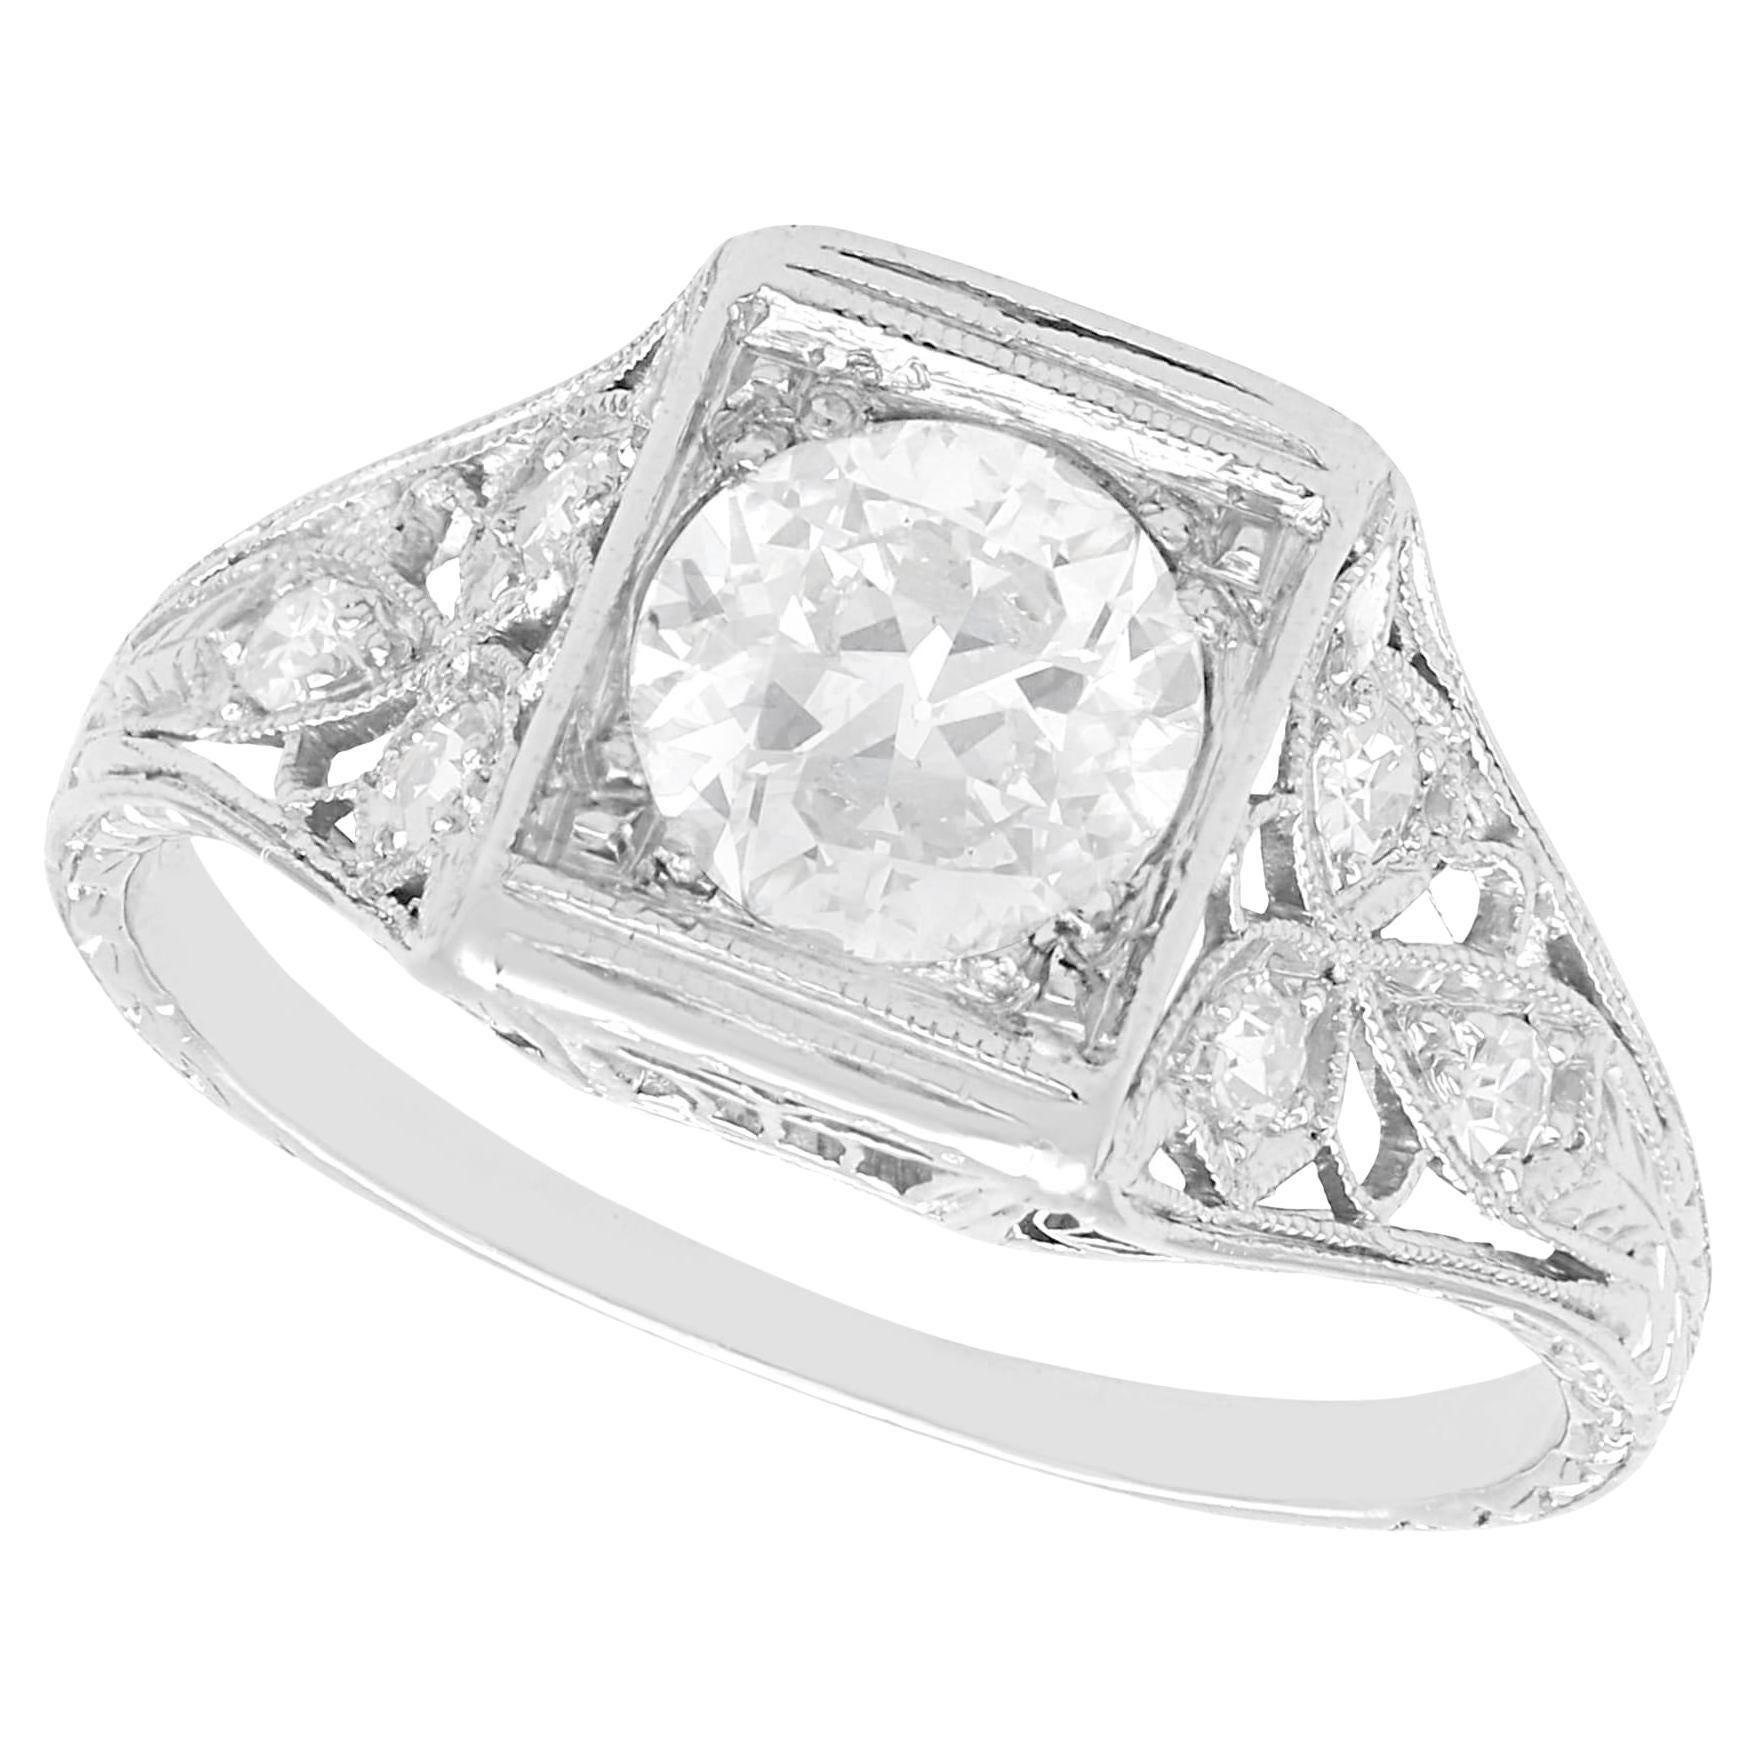 1900s Antique 1.14 Carat Diamond and Platinum Solitaire Ring For Sale